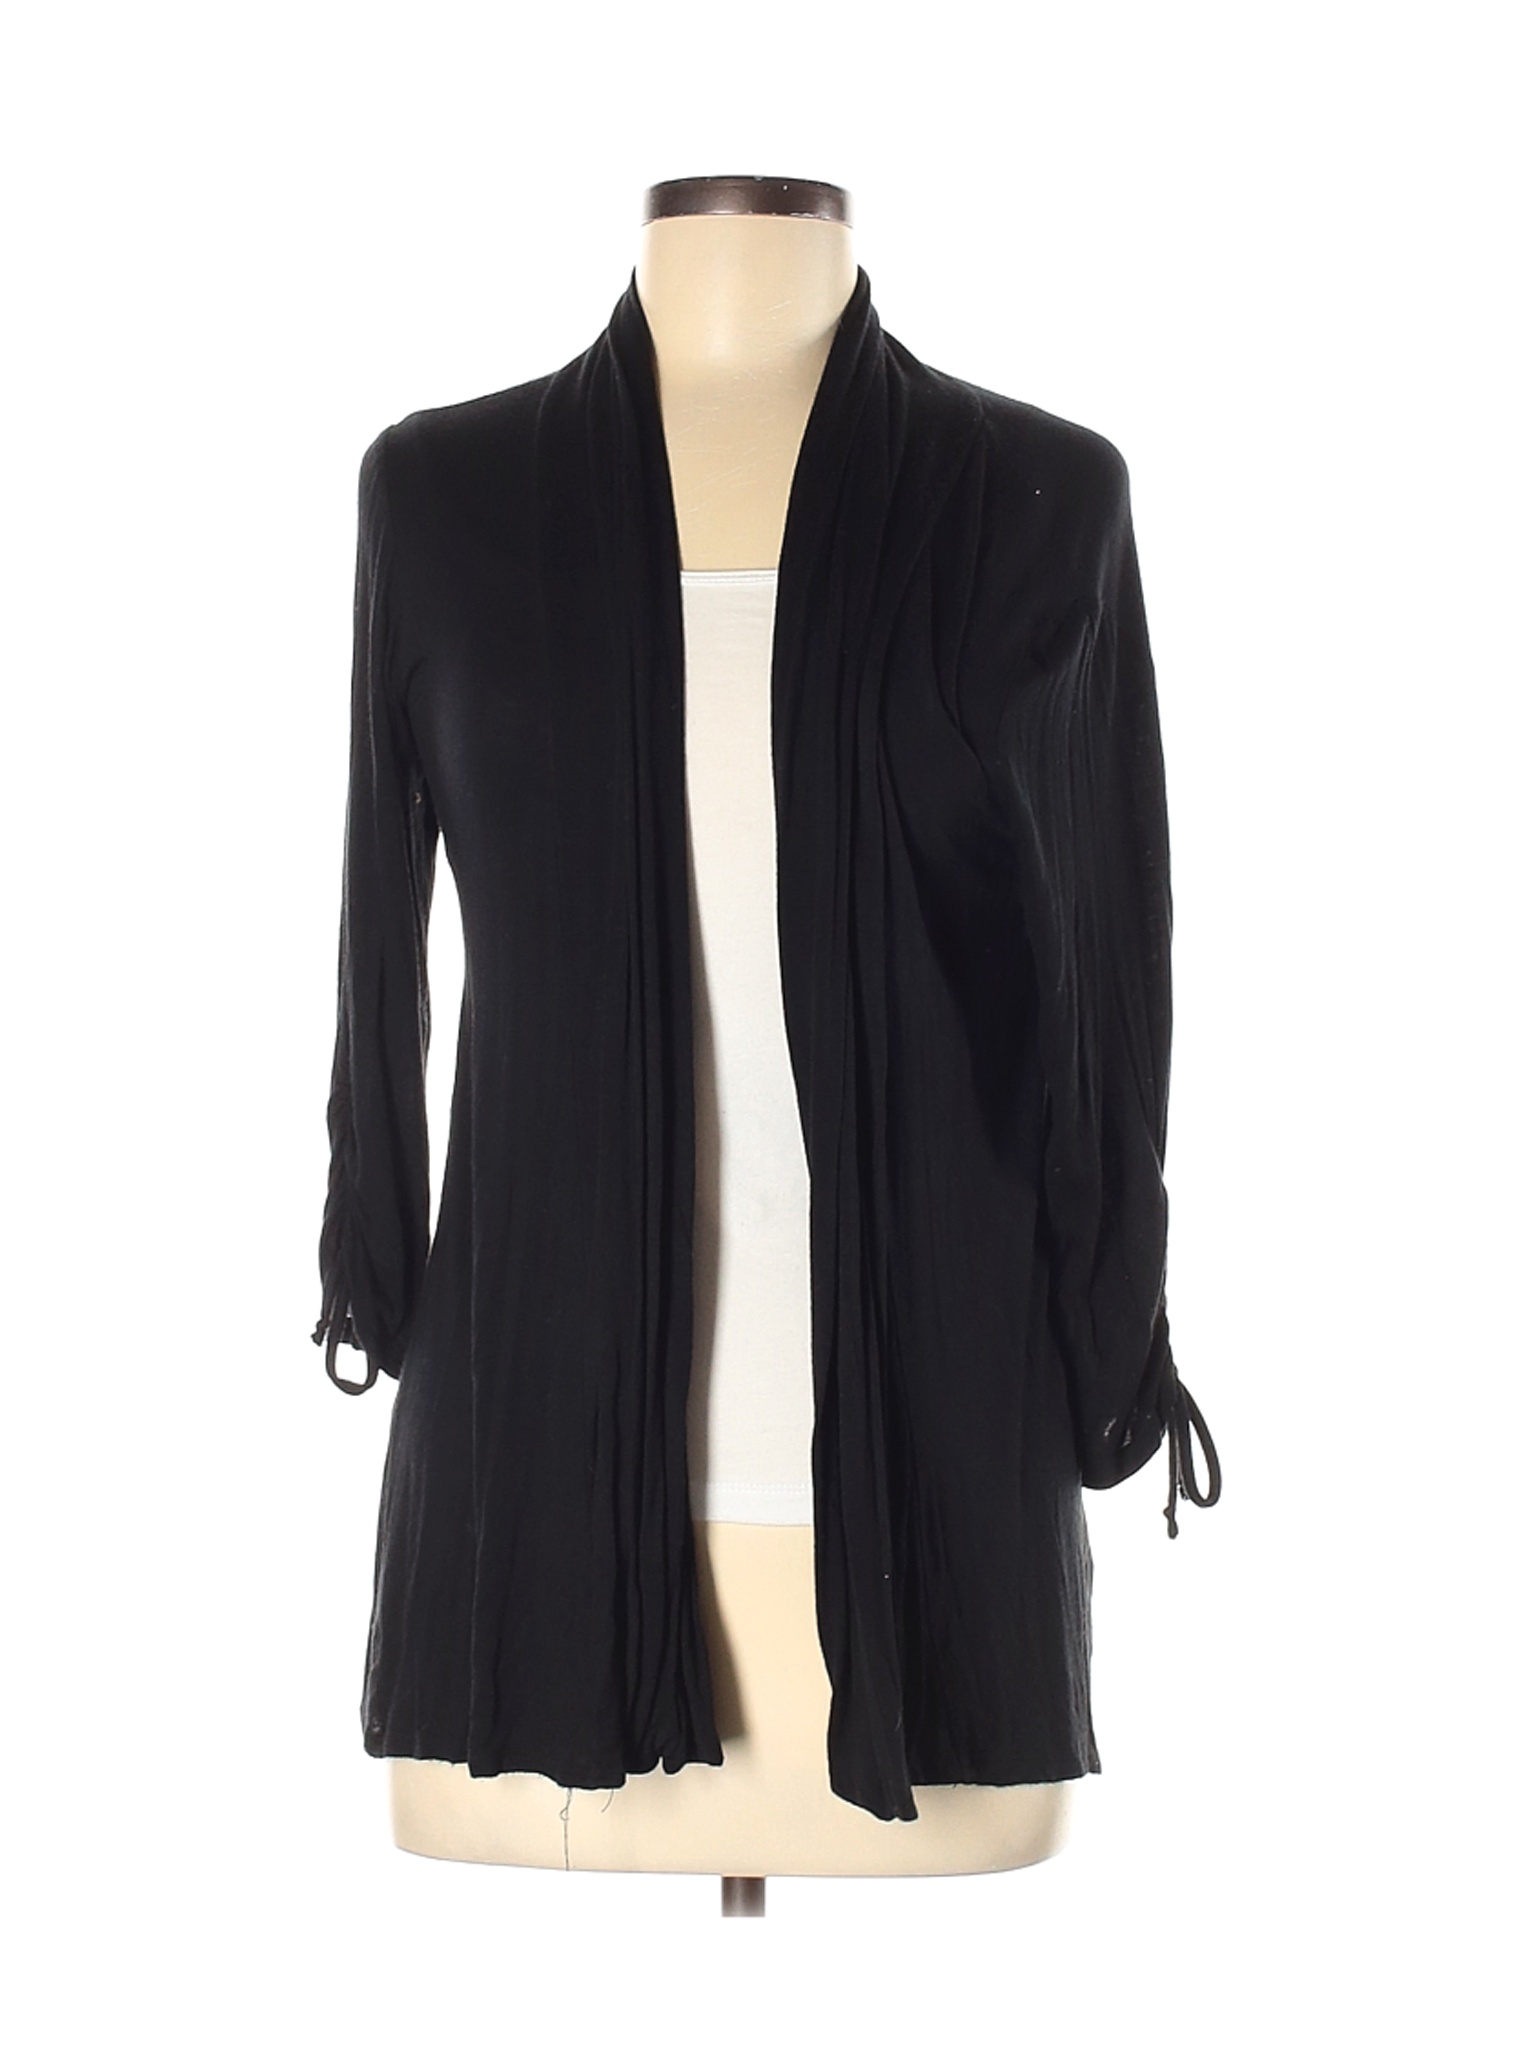 American City Wear Women Black Cardigan M | eBay